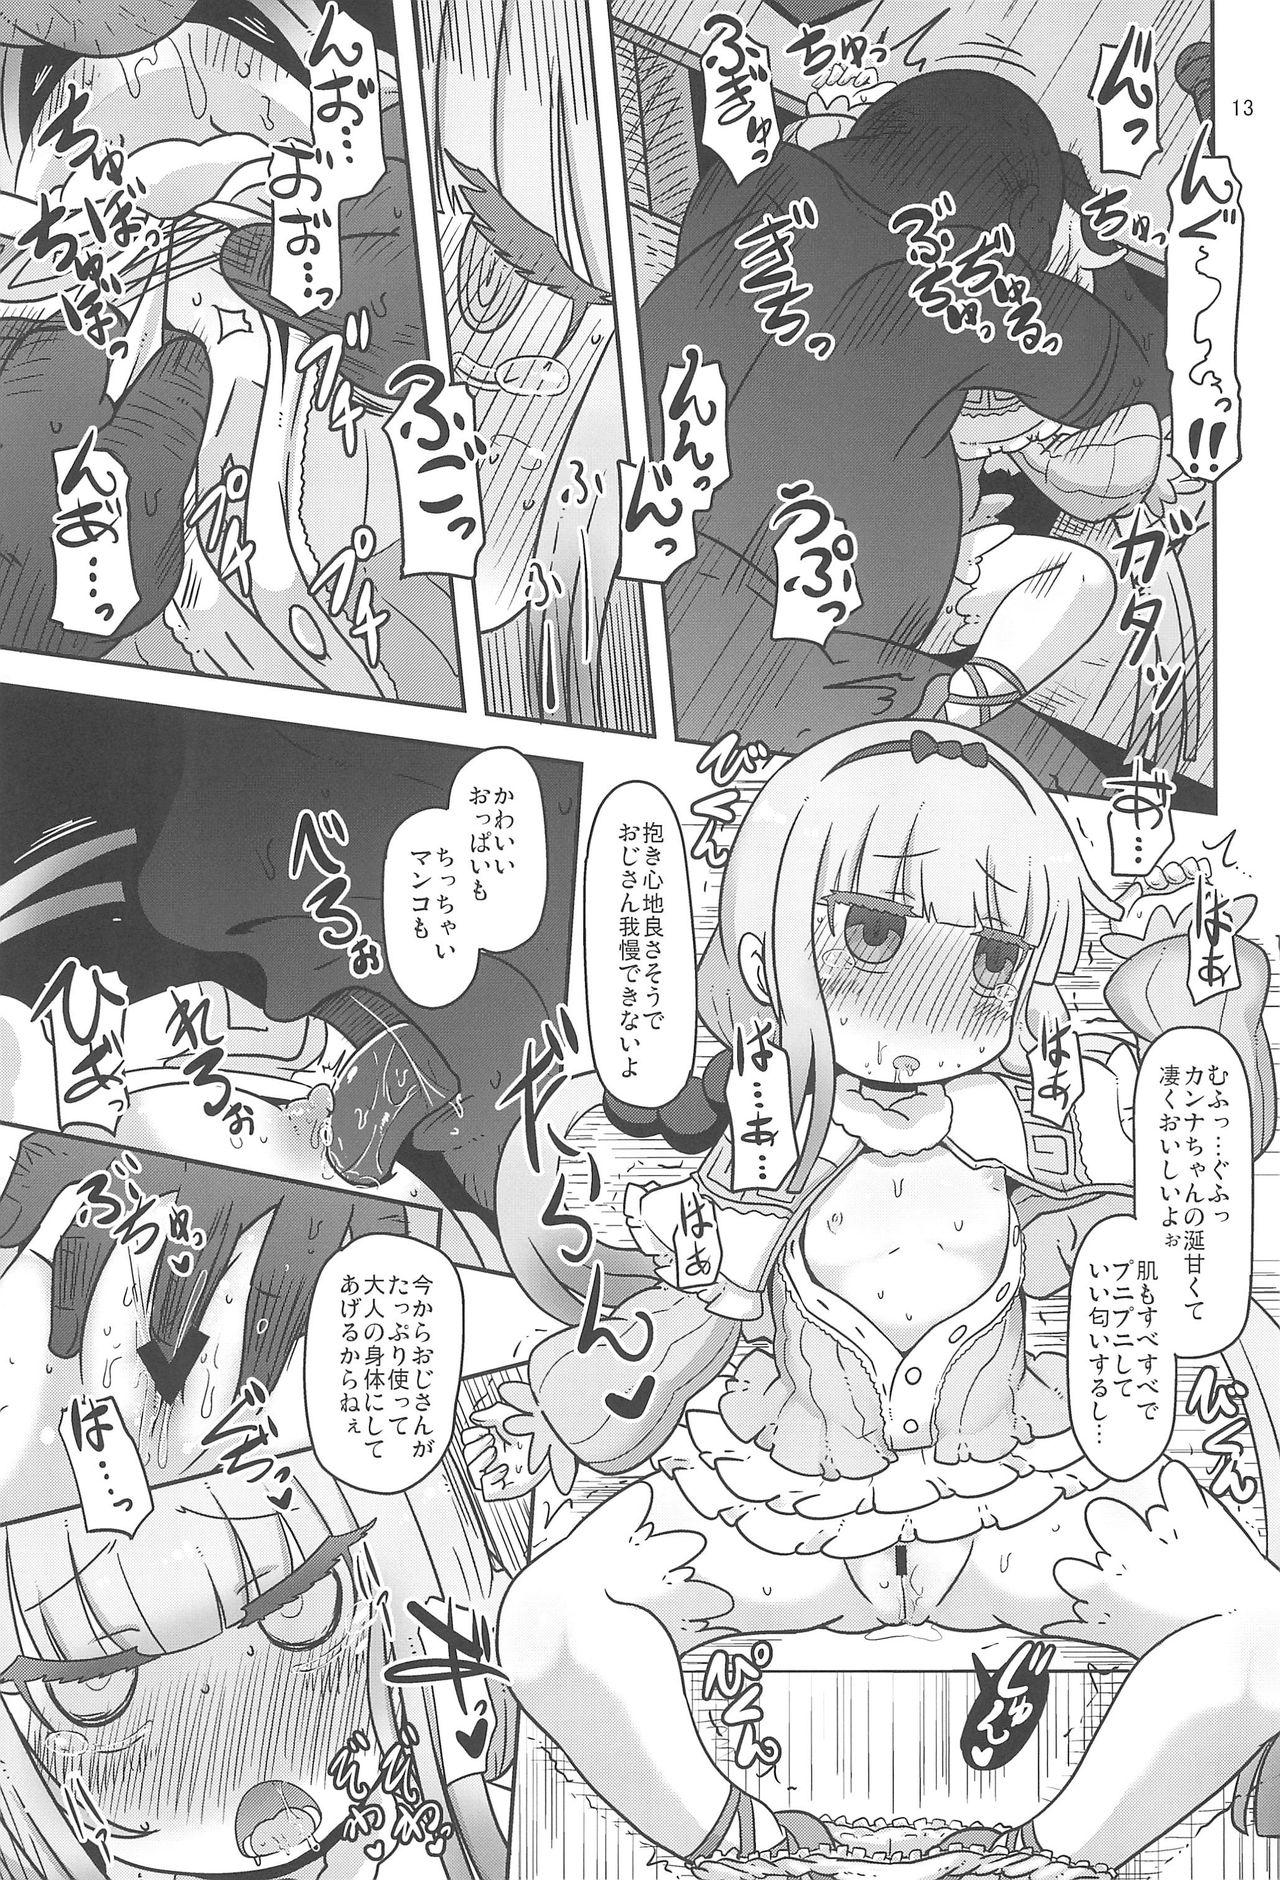 She Dragonic Lolita Bomb! - Kobayashi-san-chi no maid dragon Lesbians - Page 13